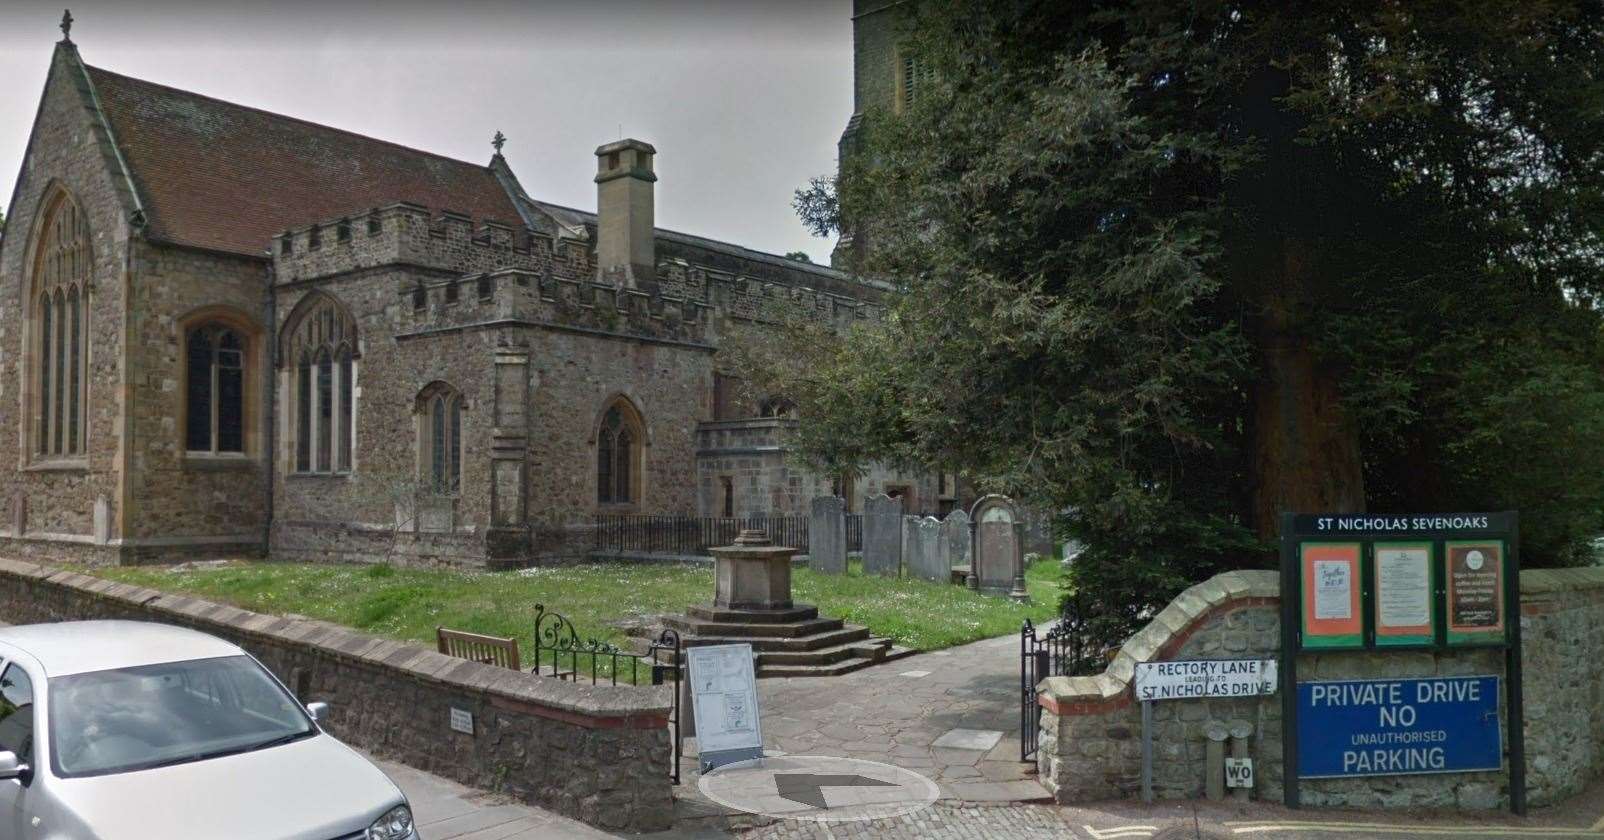 St Nicholas Church, Rectory Lane in Sevenoaks - Picture from Google Maps